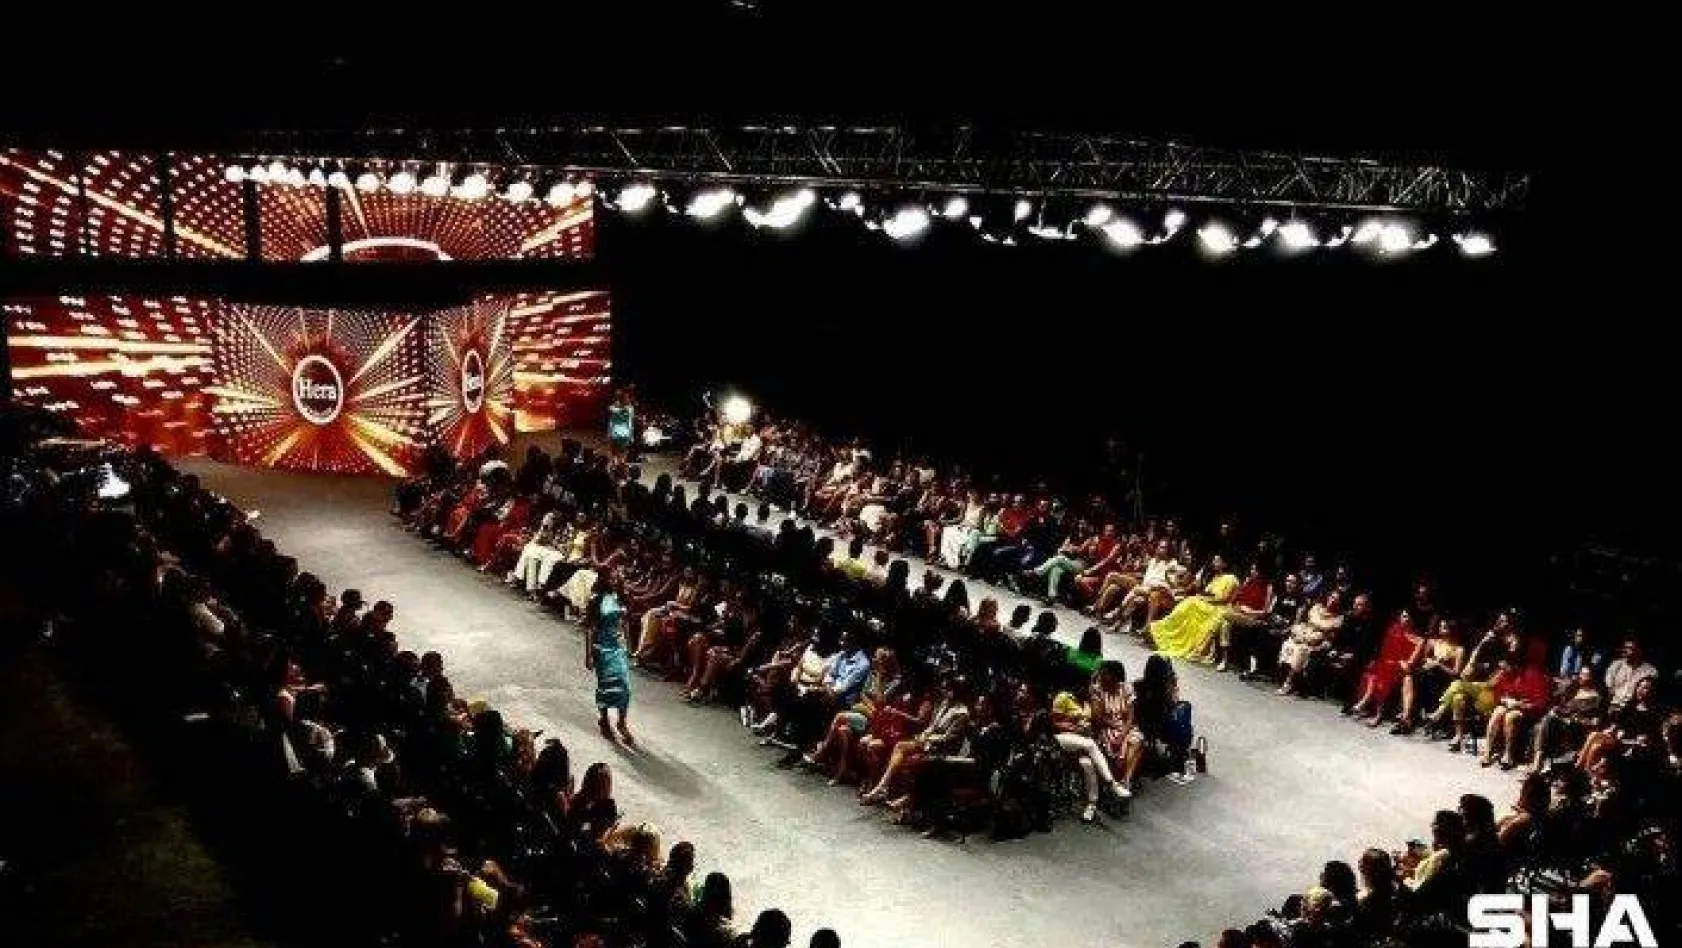 Türk mankenler Montenegro Fashion Week'te boy gösterecek